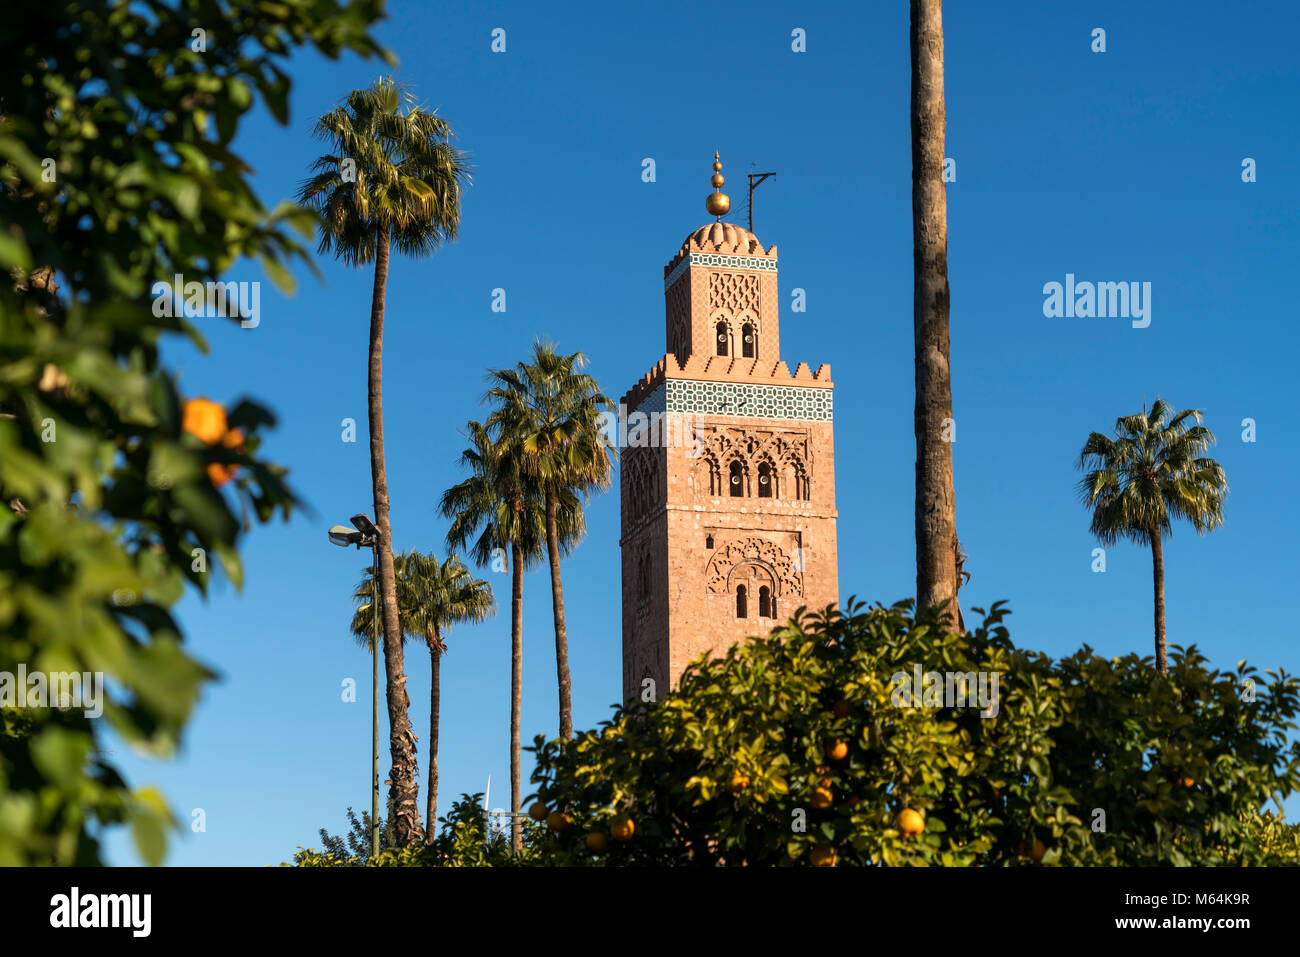 Minarett Koutoubia-Moschee, Königreich der Marokko, Afrika | Koutoubia minaret, Marrakech, Royaume du Maroc, l'Afrique Banque D'Images